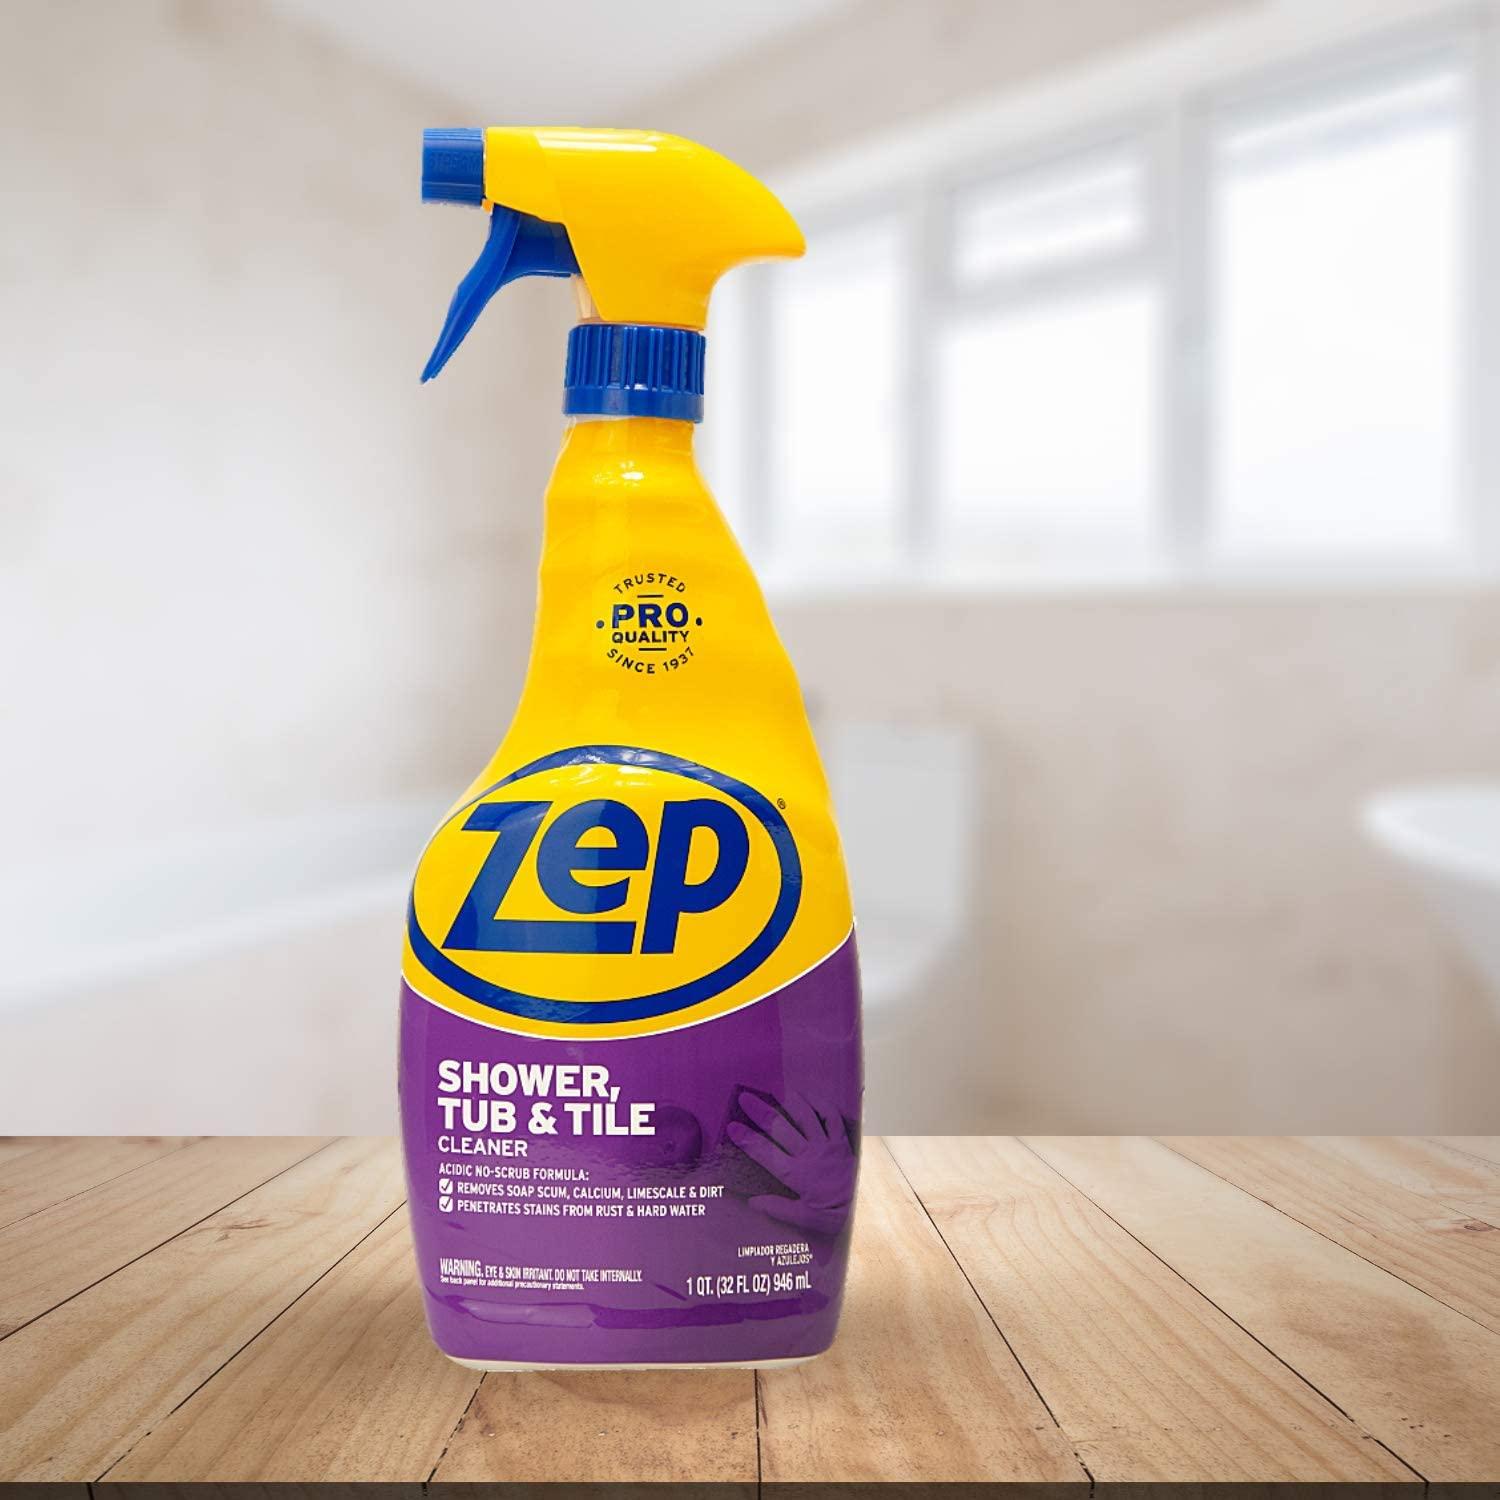 Zep Mold & Mildew Stain Remover Spray, 946-mL